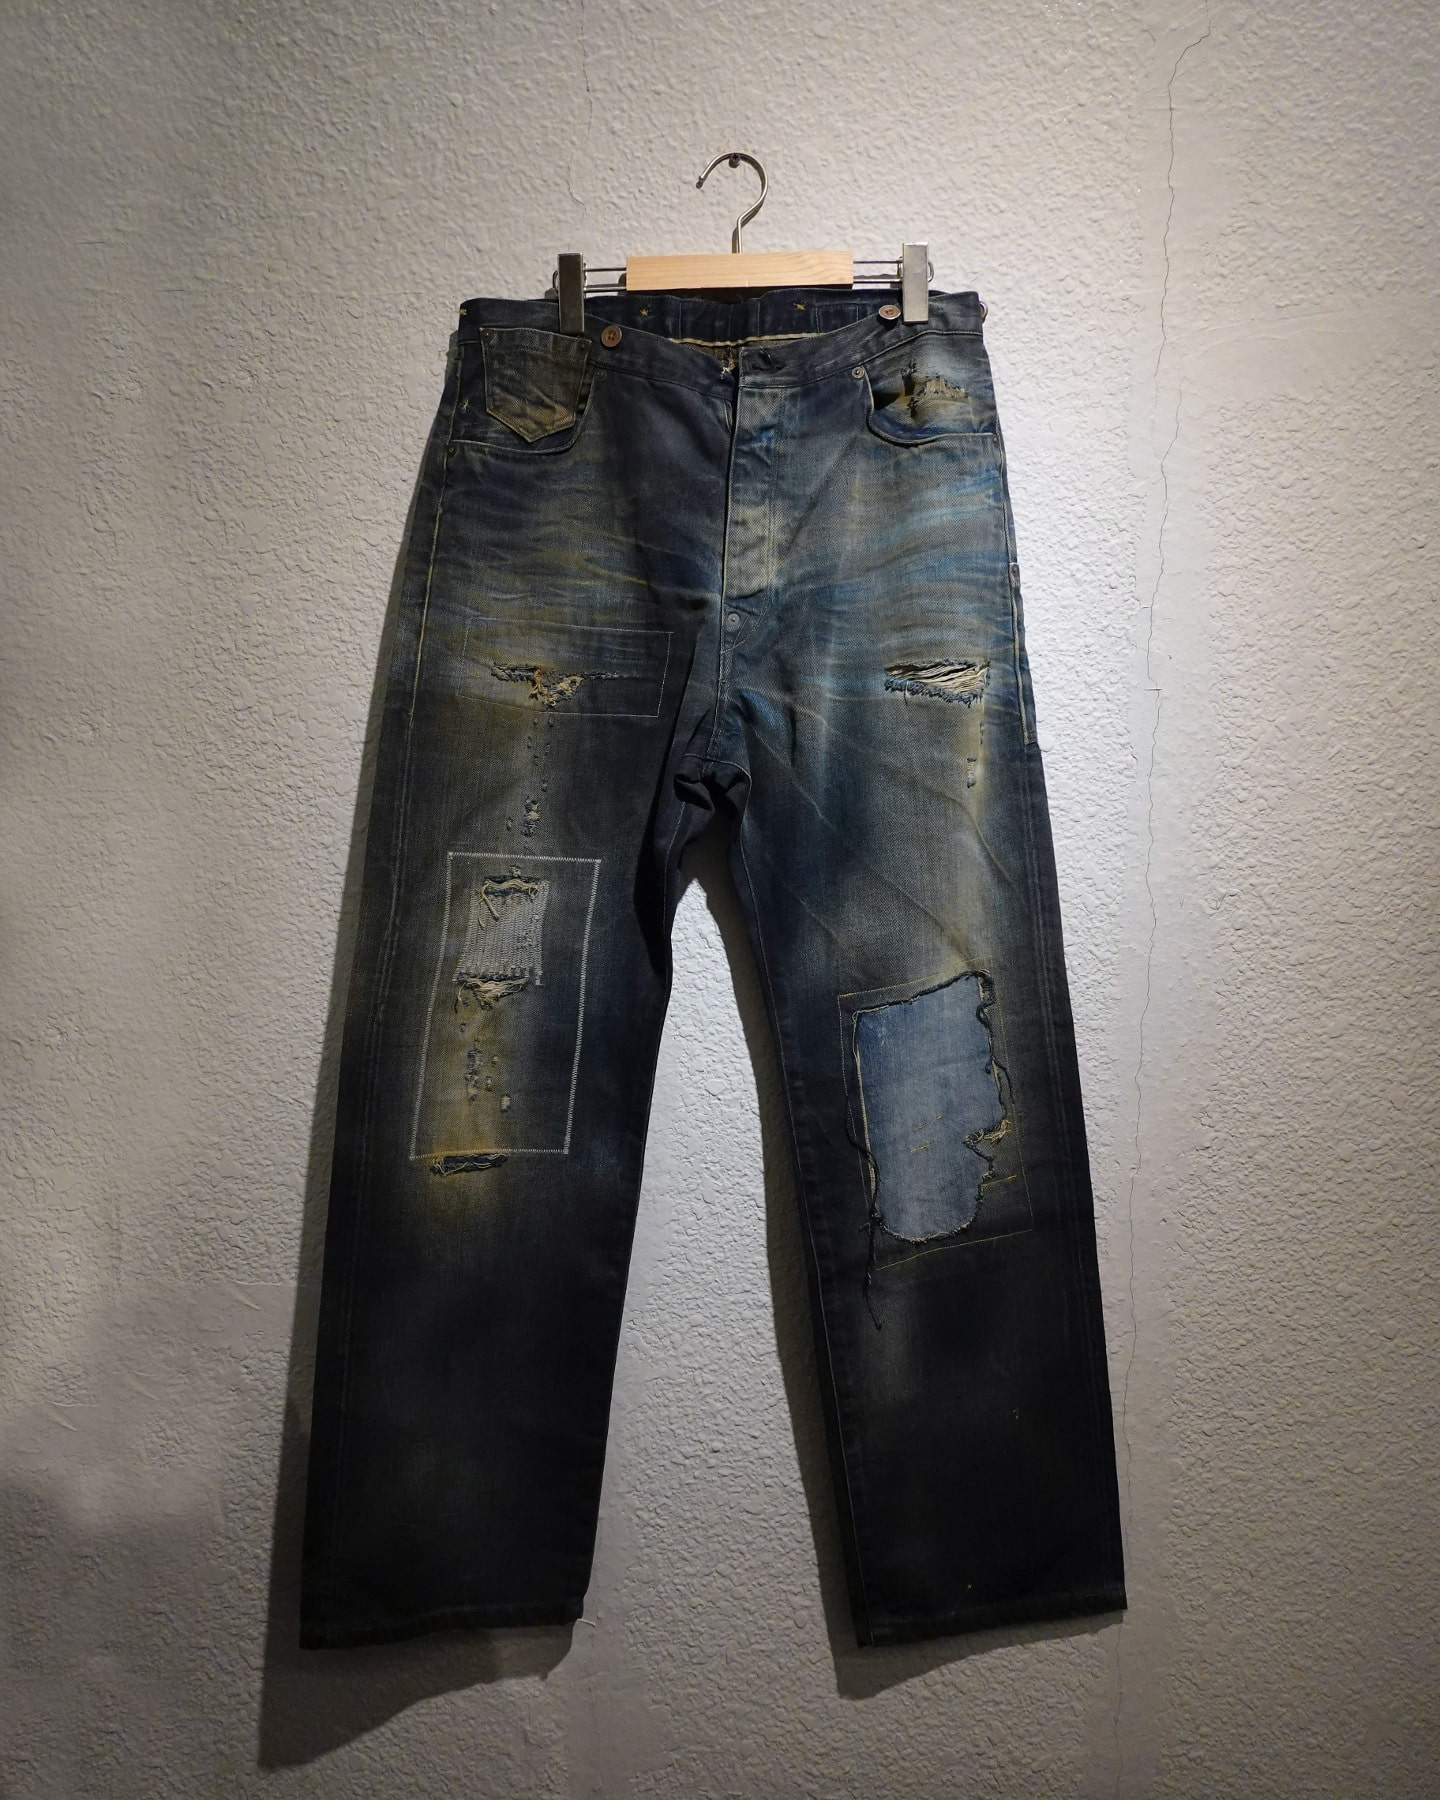 LVC NEVADA Barnstorm 1886 Jeans (34 size)